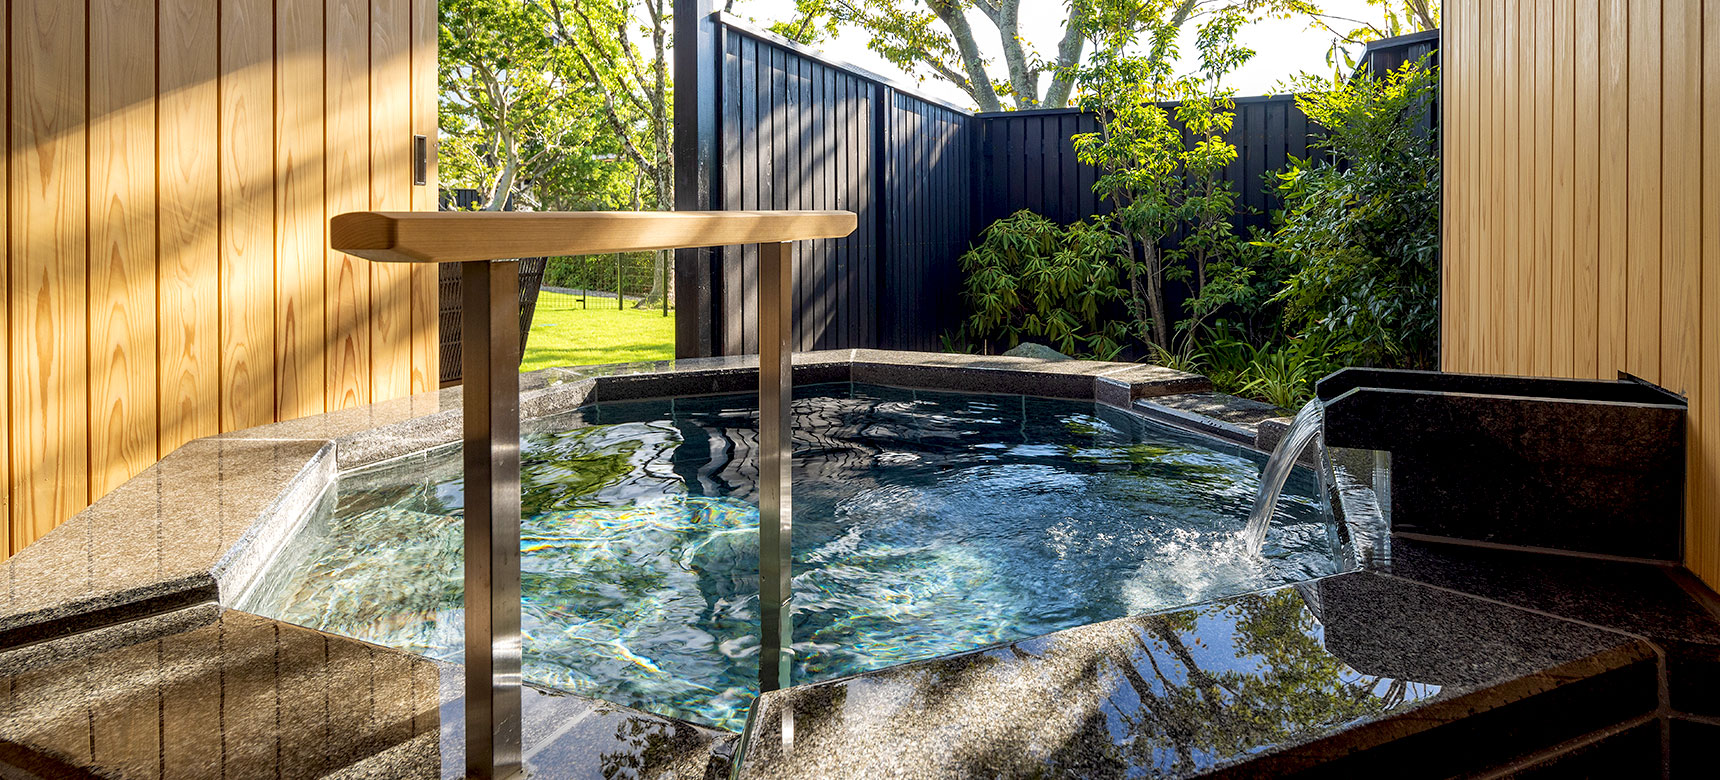 Dog-friendly Villa with open-air hot spring bath